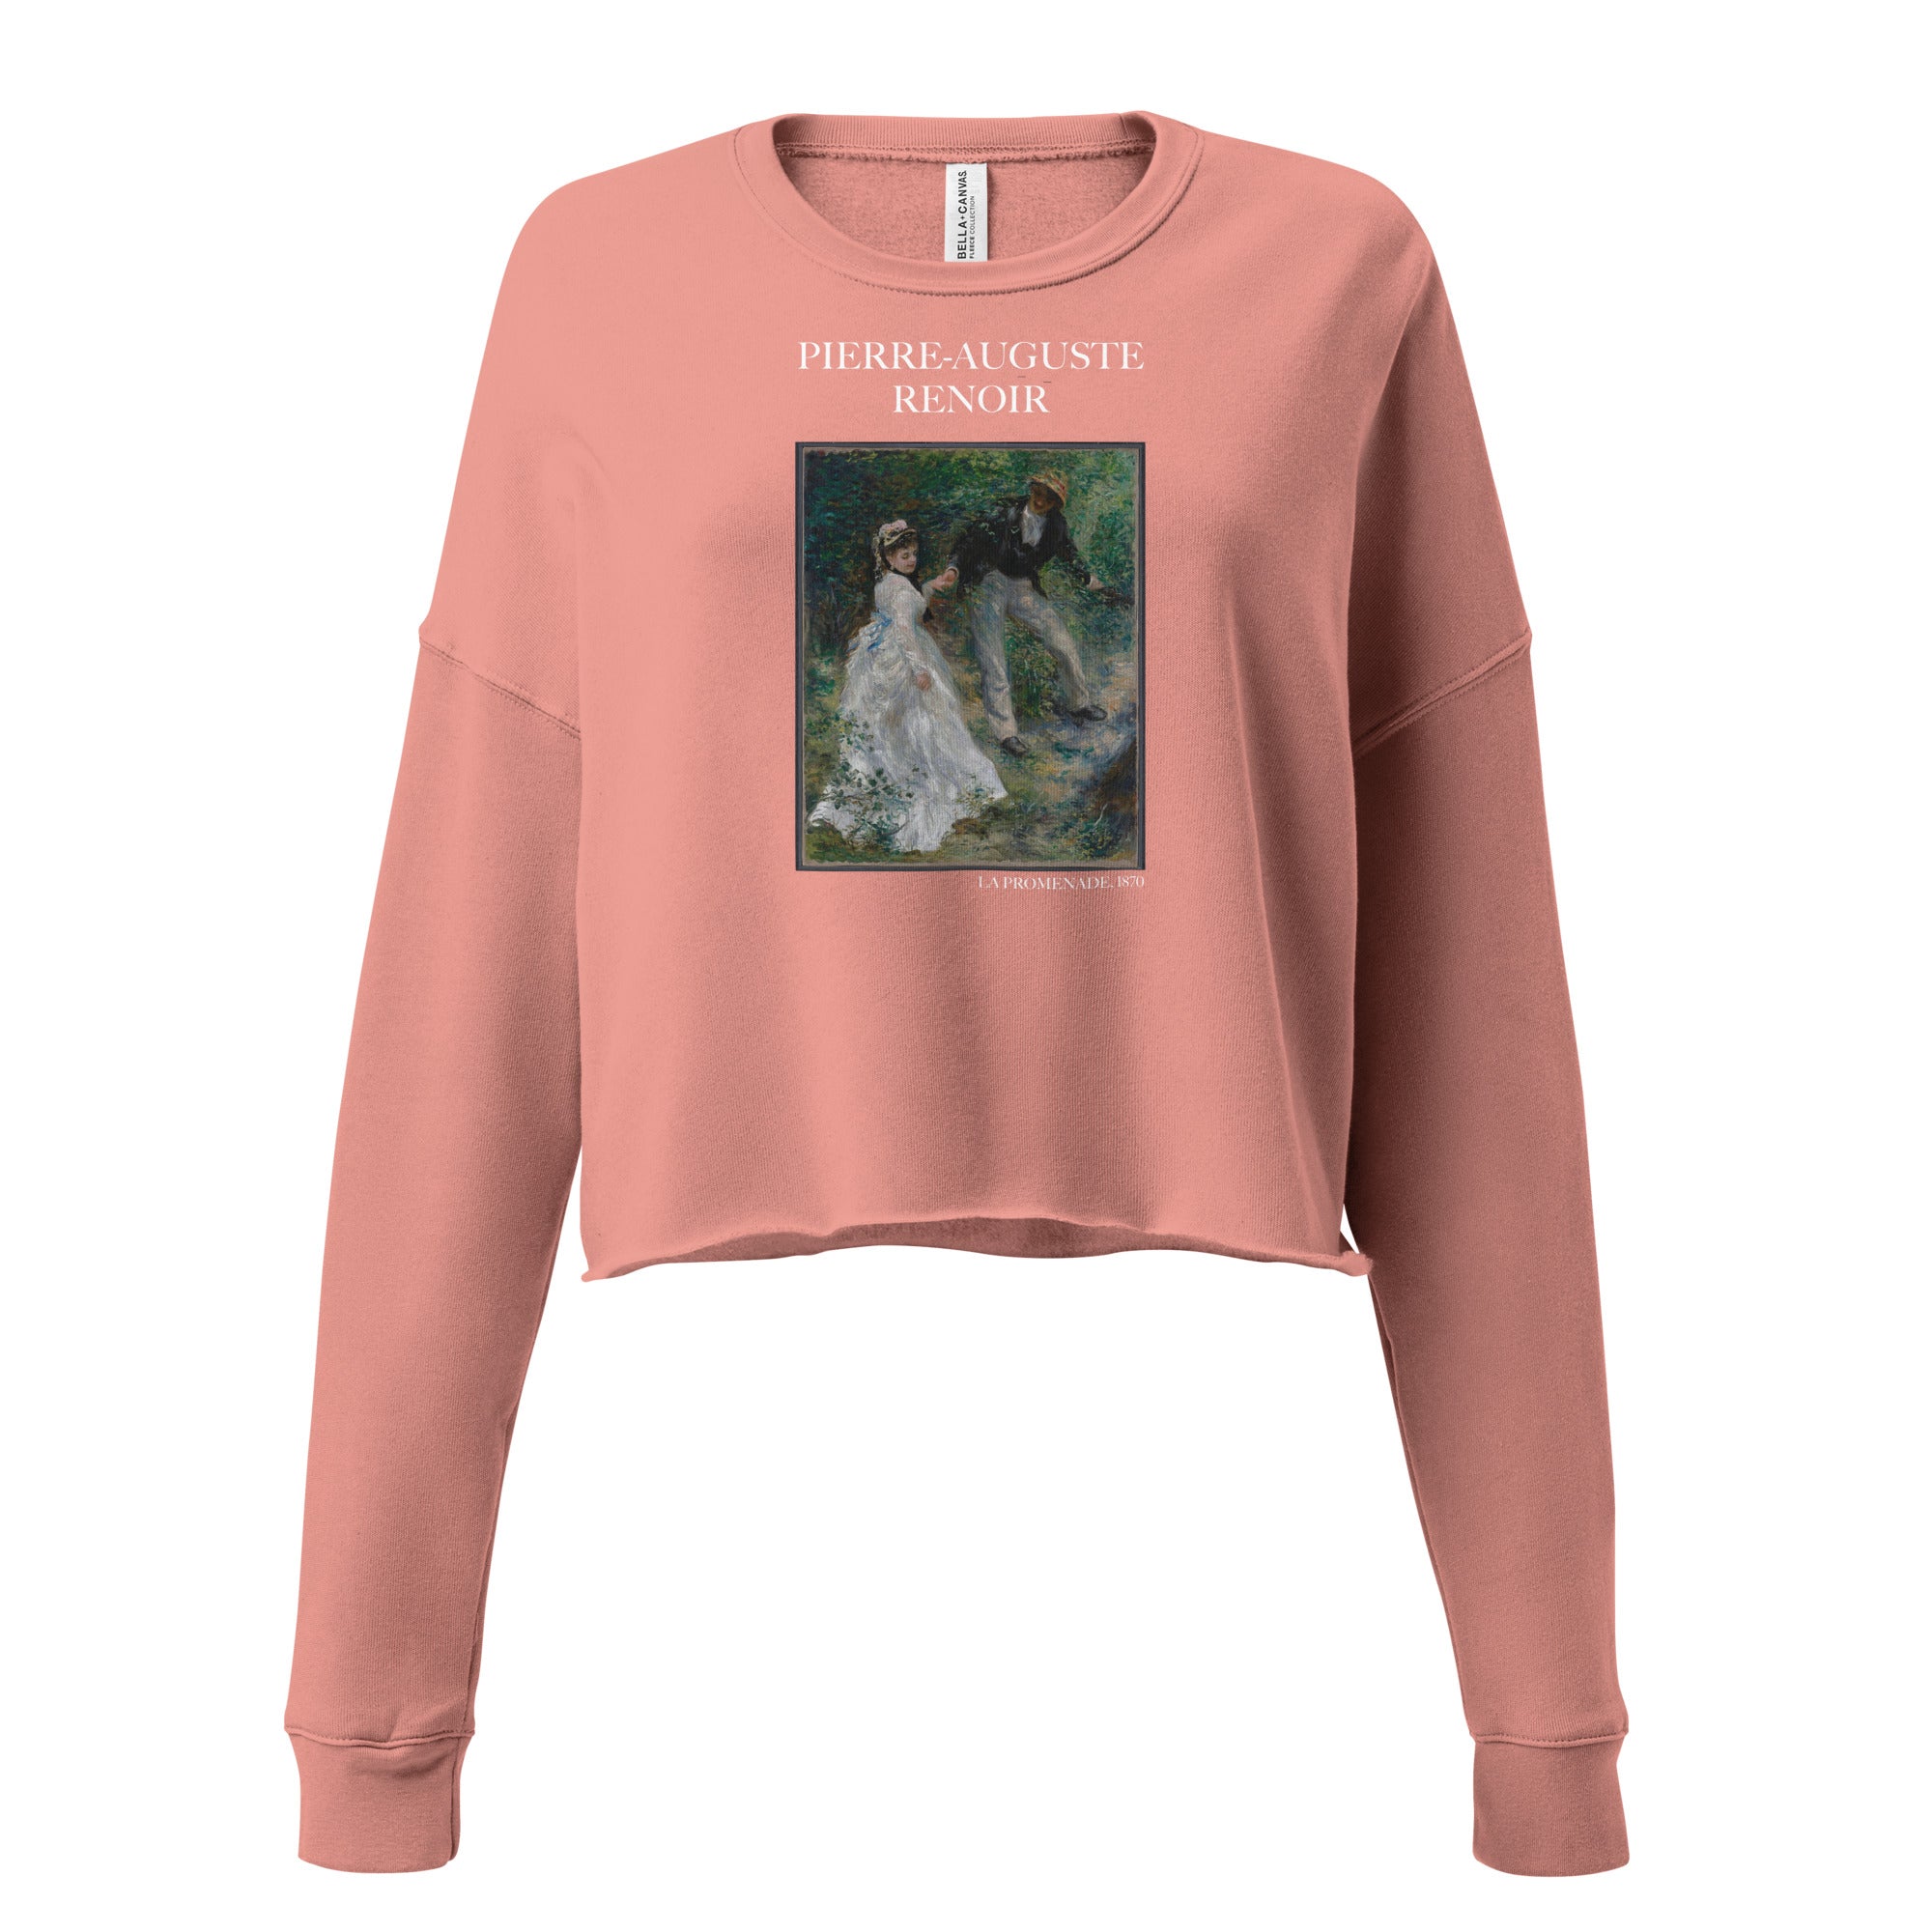 Pierre-Auguste Renoir 'La Promenade' Famous Painting Cropped Sweatshirt | Premium Art Cropped Sweatshirt